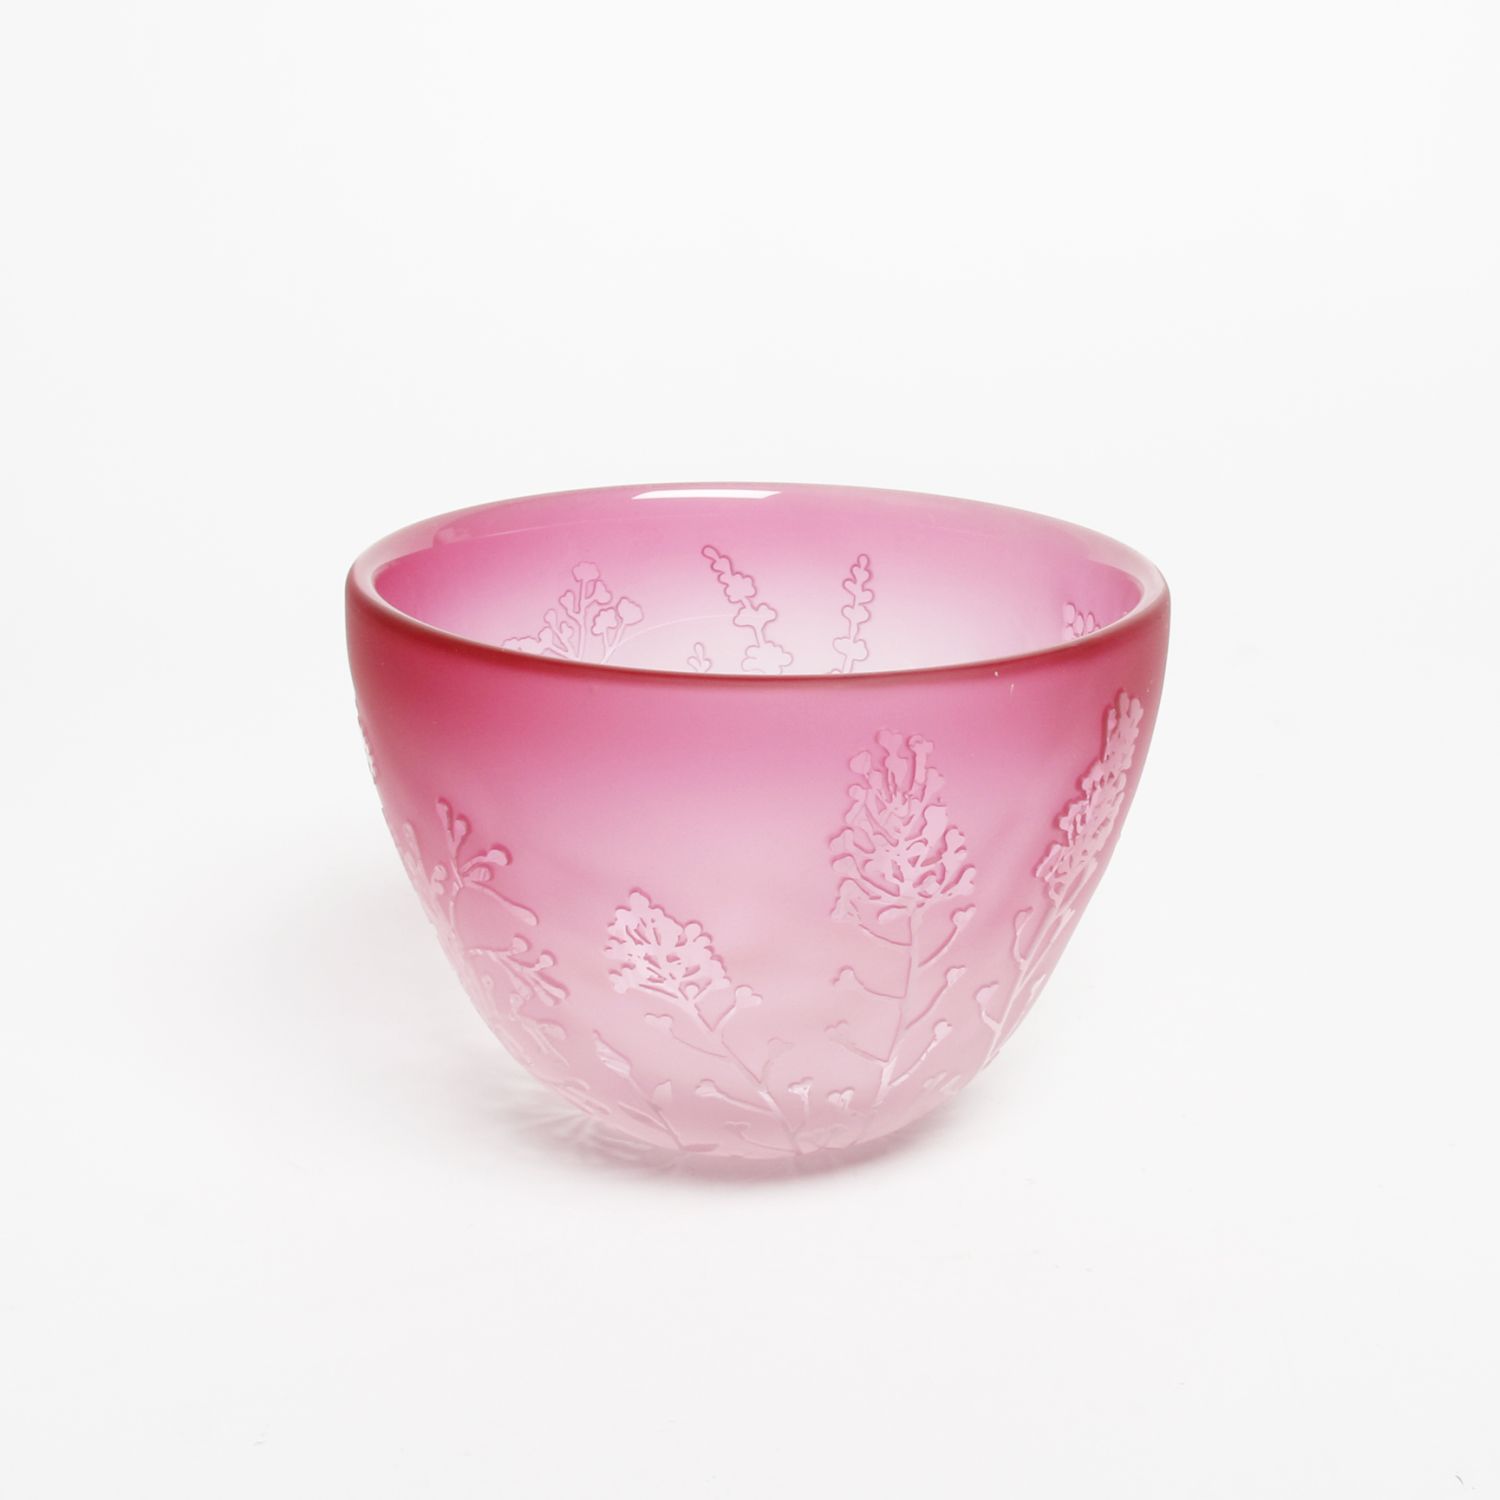 Carol Nesbitt: Big Pink Bowl Glass Product Image 1 of 2